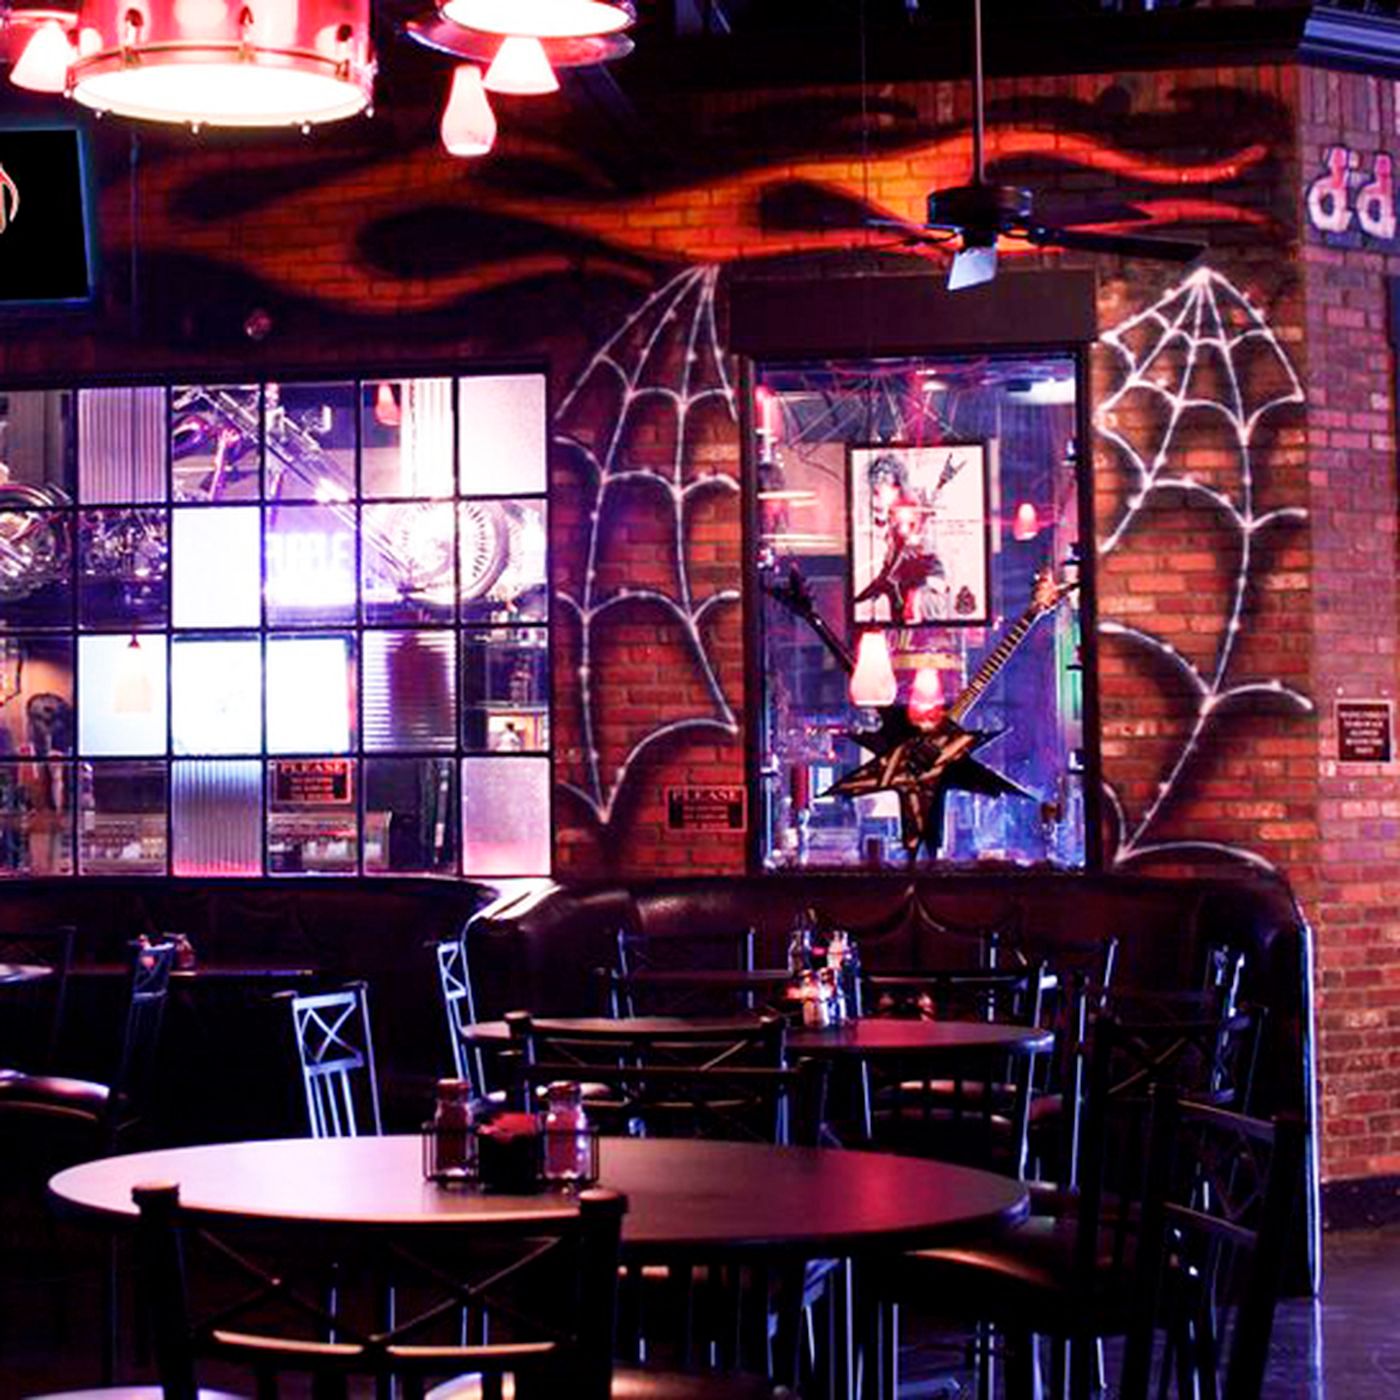 inside Danny koker's bar, Count’s Vamp’d Rock Bar & Grill